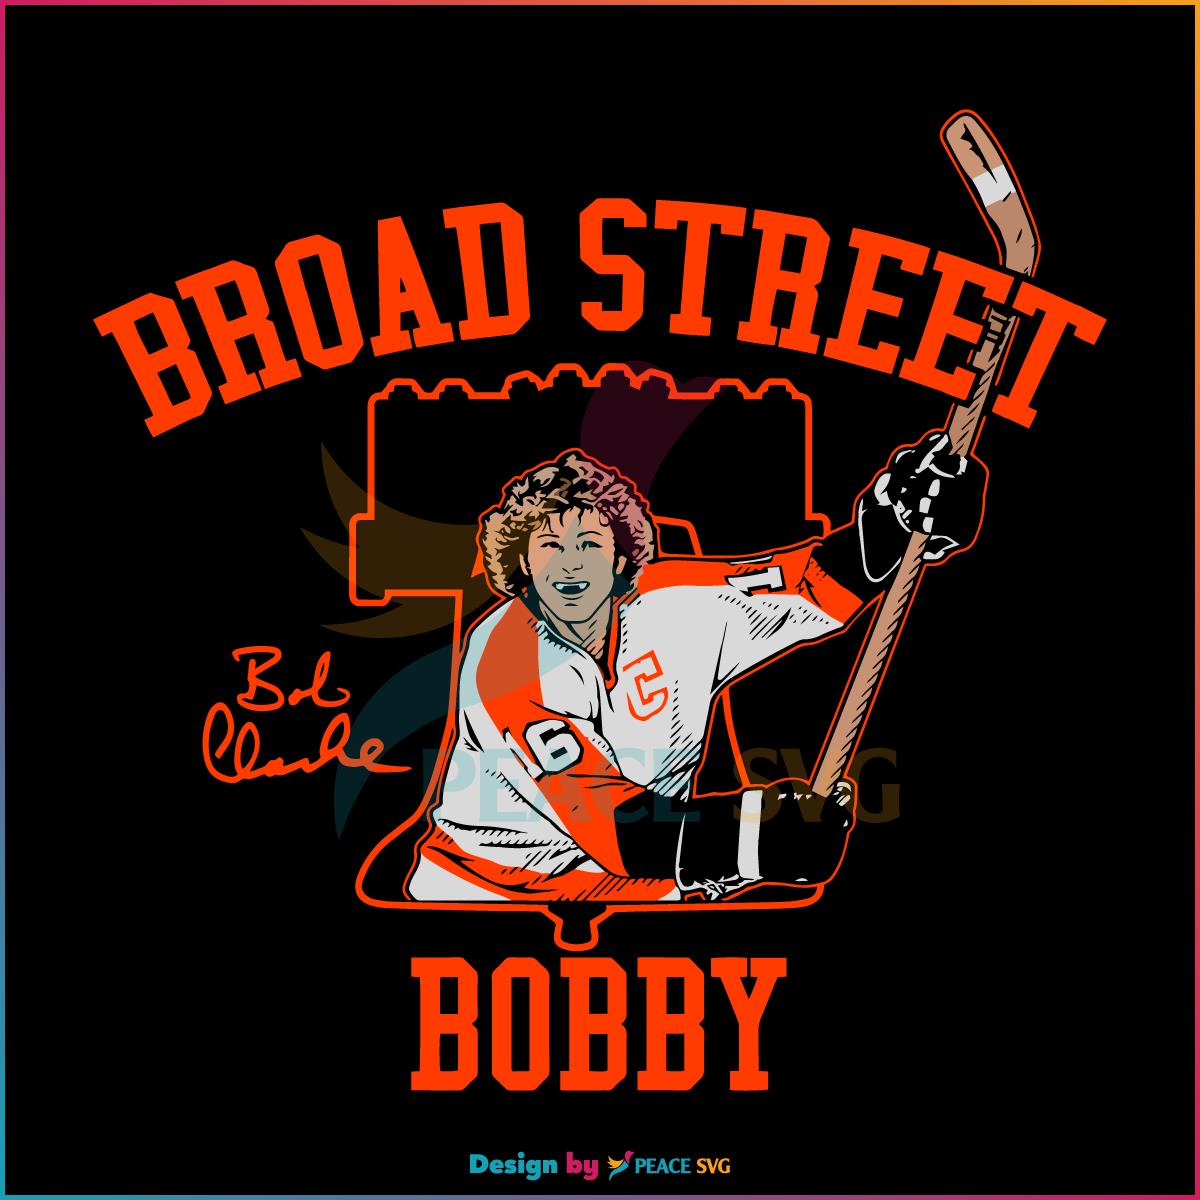 Bobby Clarke Broad Street Bobby Svg, Graphic Designs Files